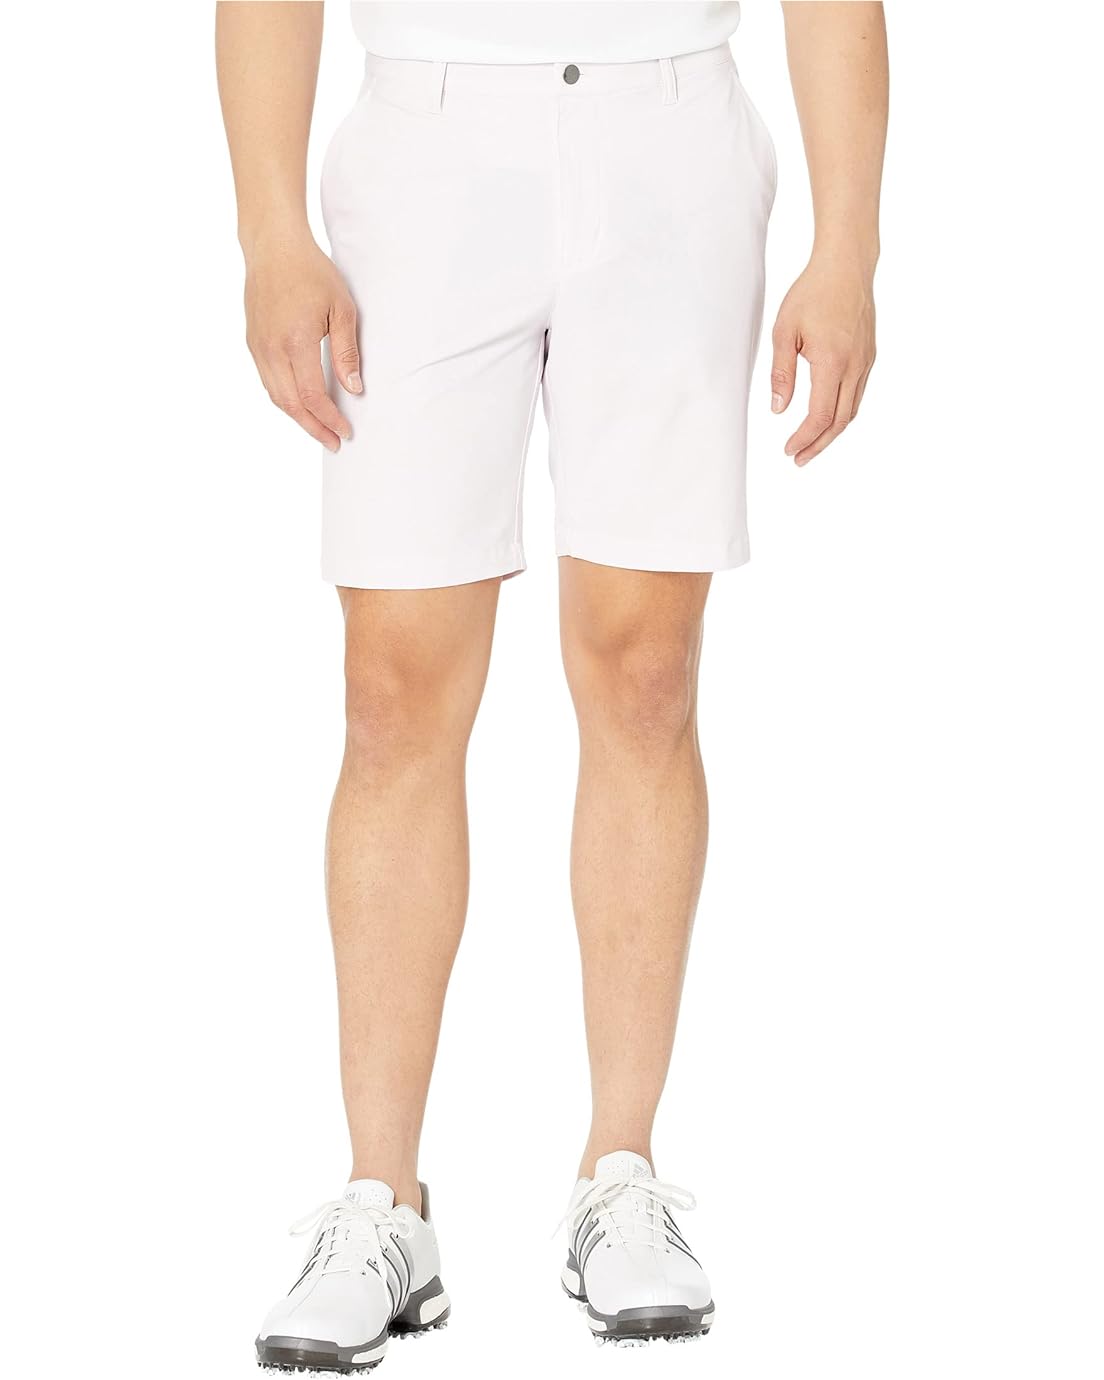 Adidas Golf Ultimate365 Core 85 Shorts